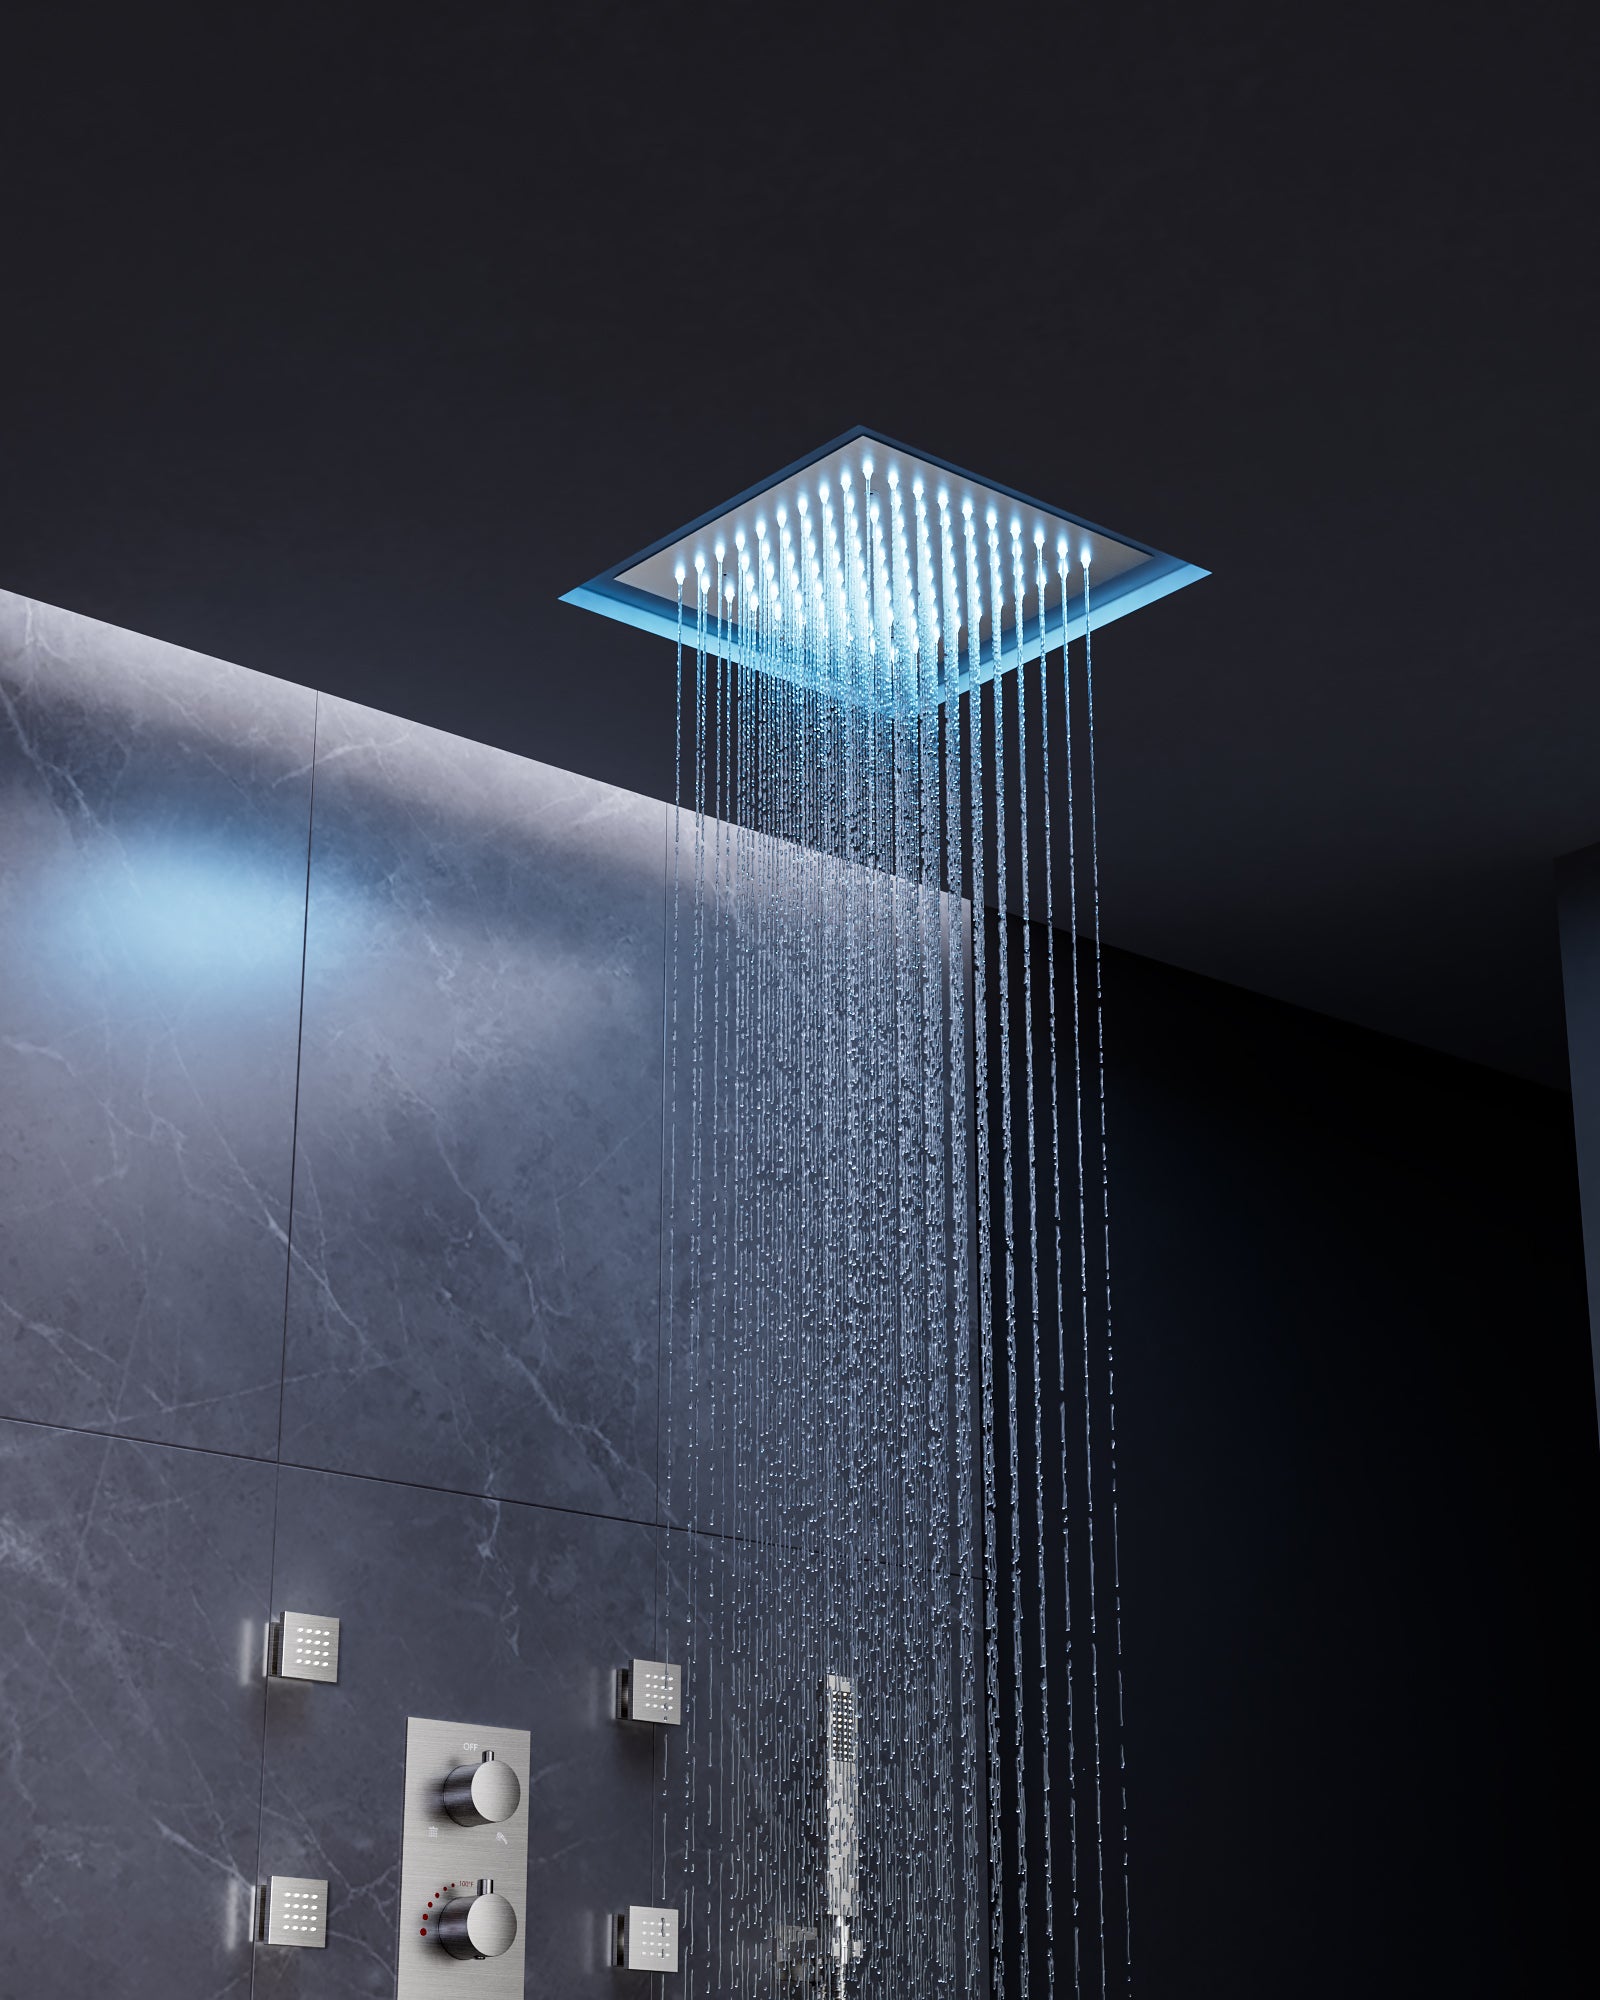 EVERSTEIN Brushed Nickel LED Rain Shower System - 12" Ceiling Color Changing Shower Head, Handheld Spray & Body Massage Jets